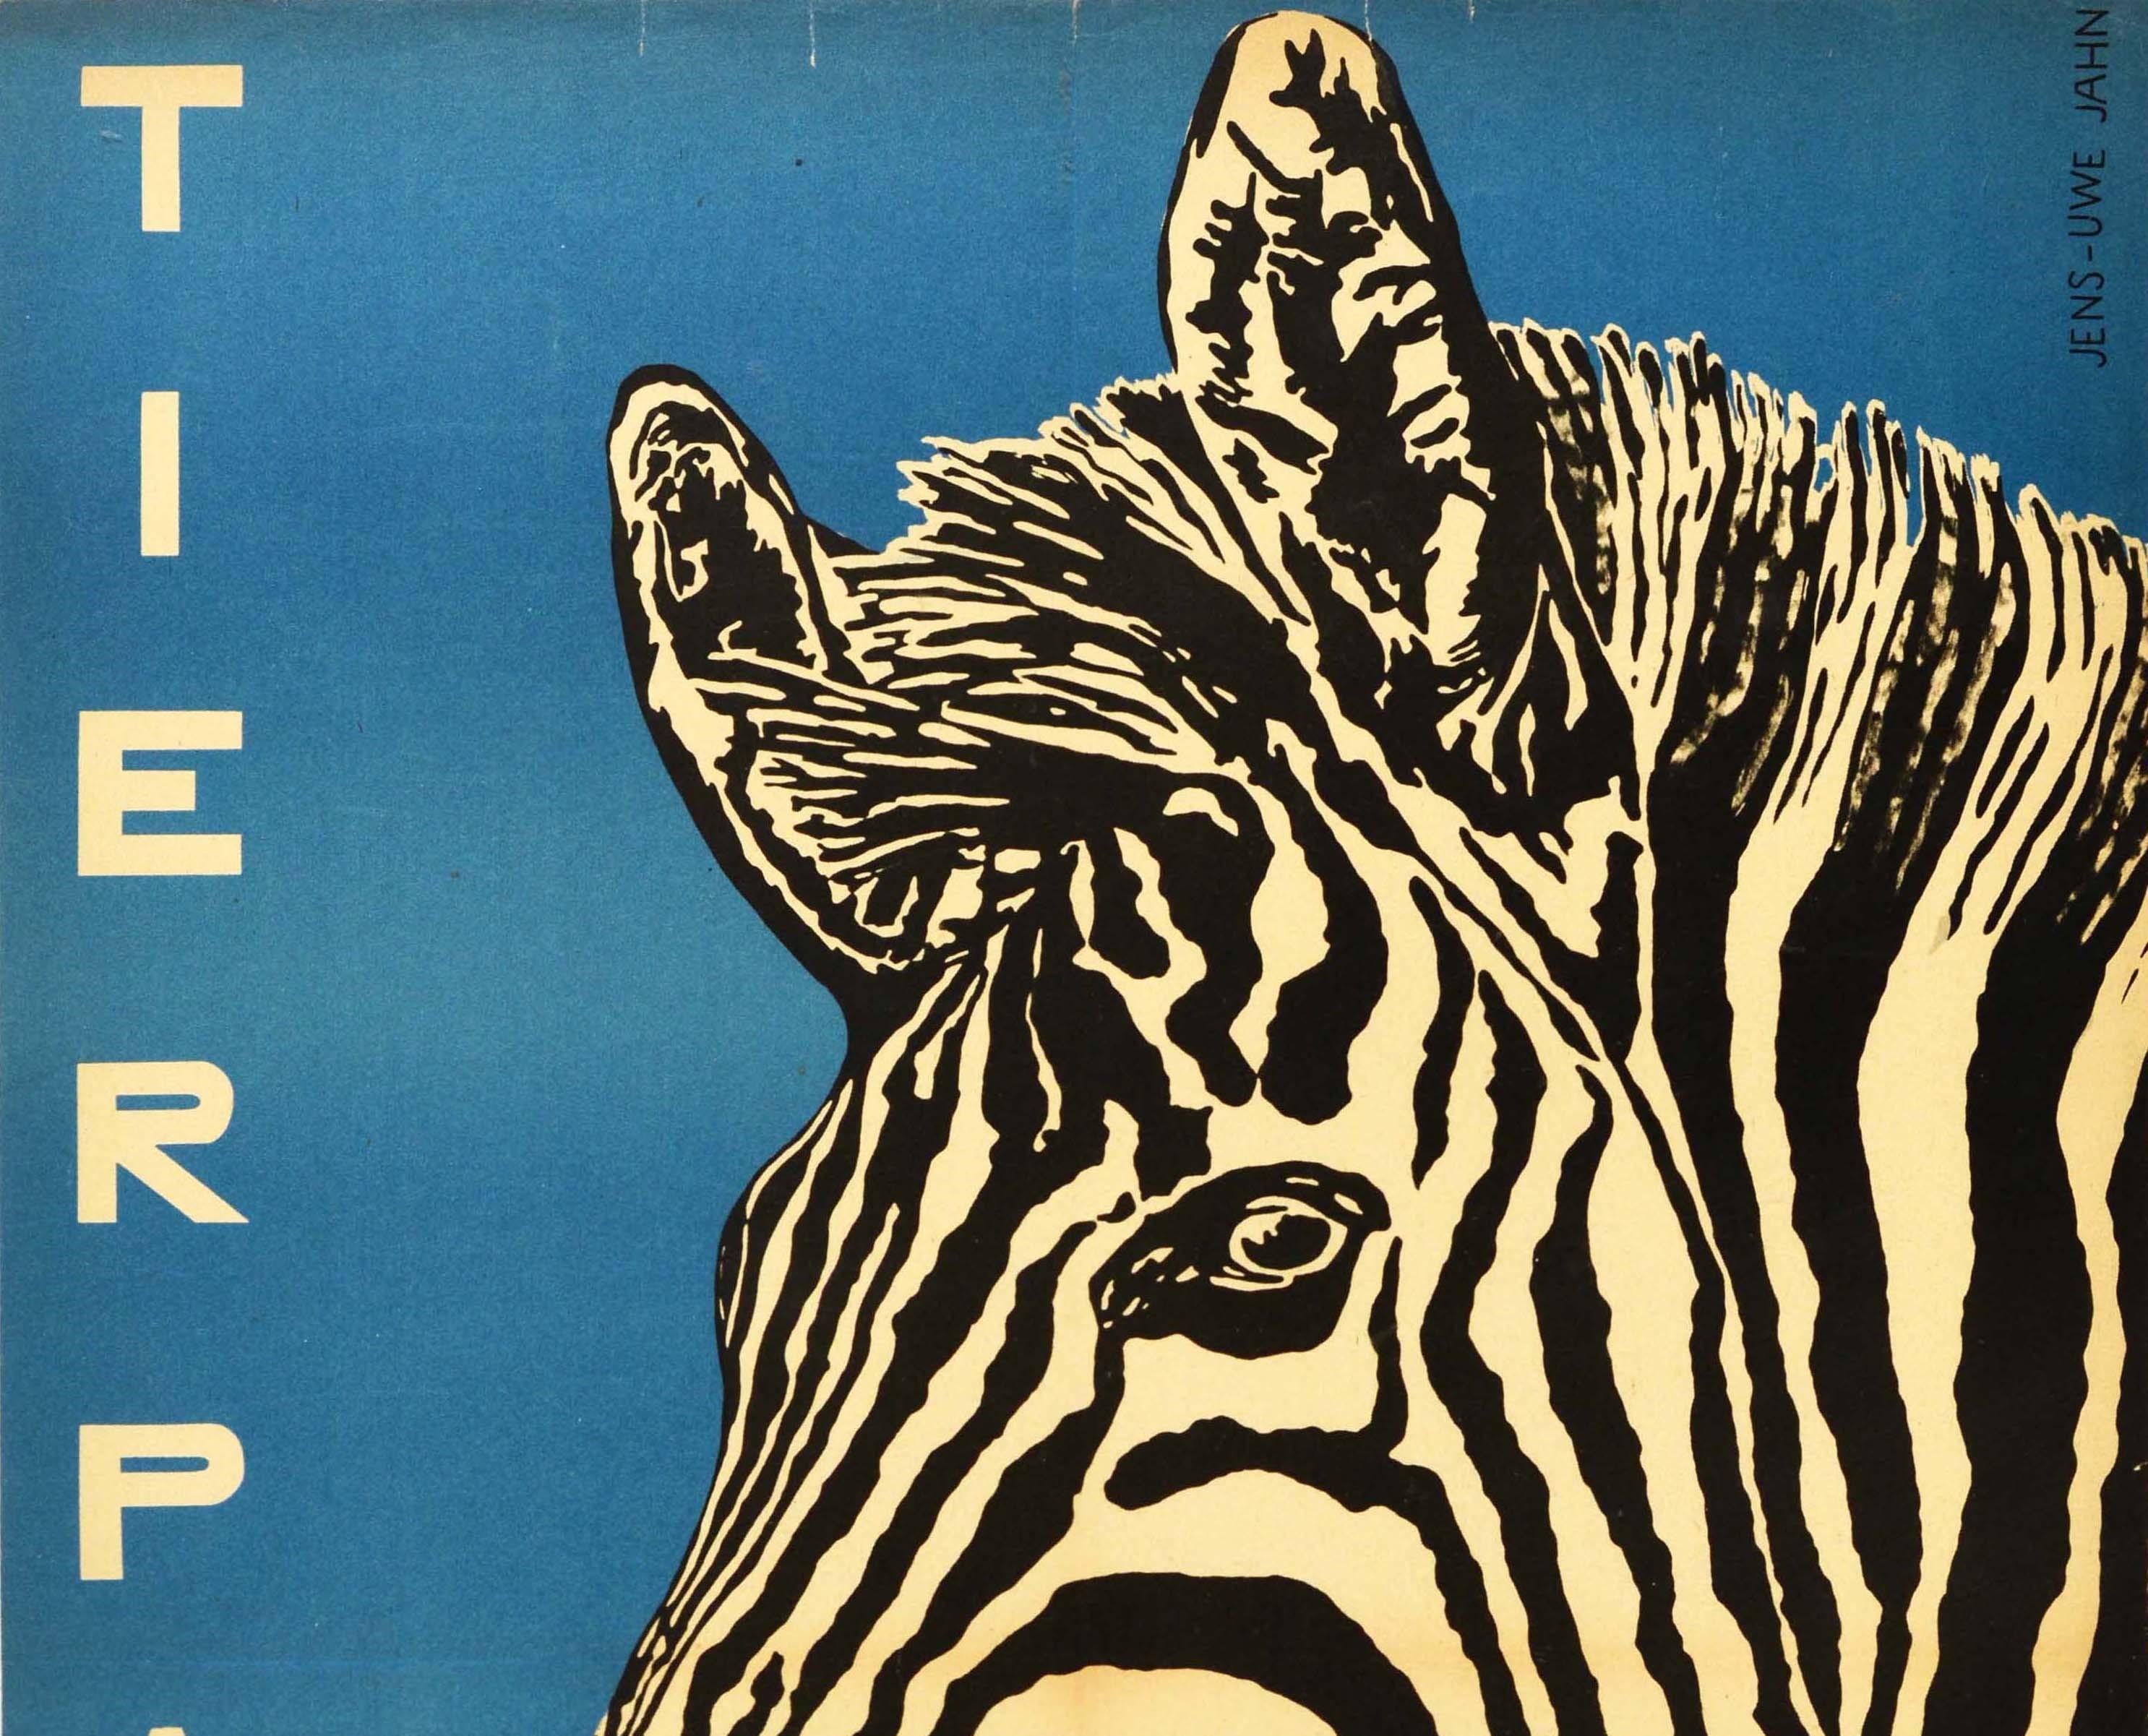 Original Vintage Poster Tierpark Berlin Zoo Friedrichsfelde Germany Zebra Design - Print by Jens-Uwe Jahn